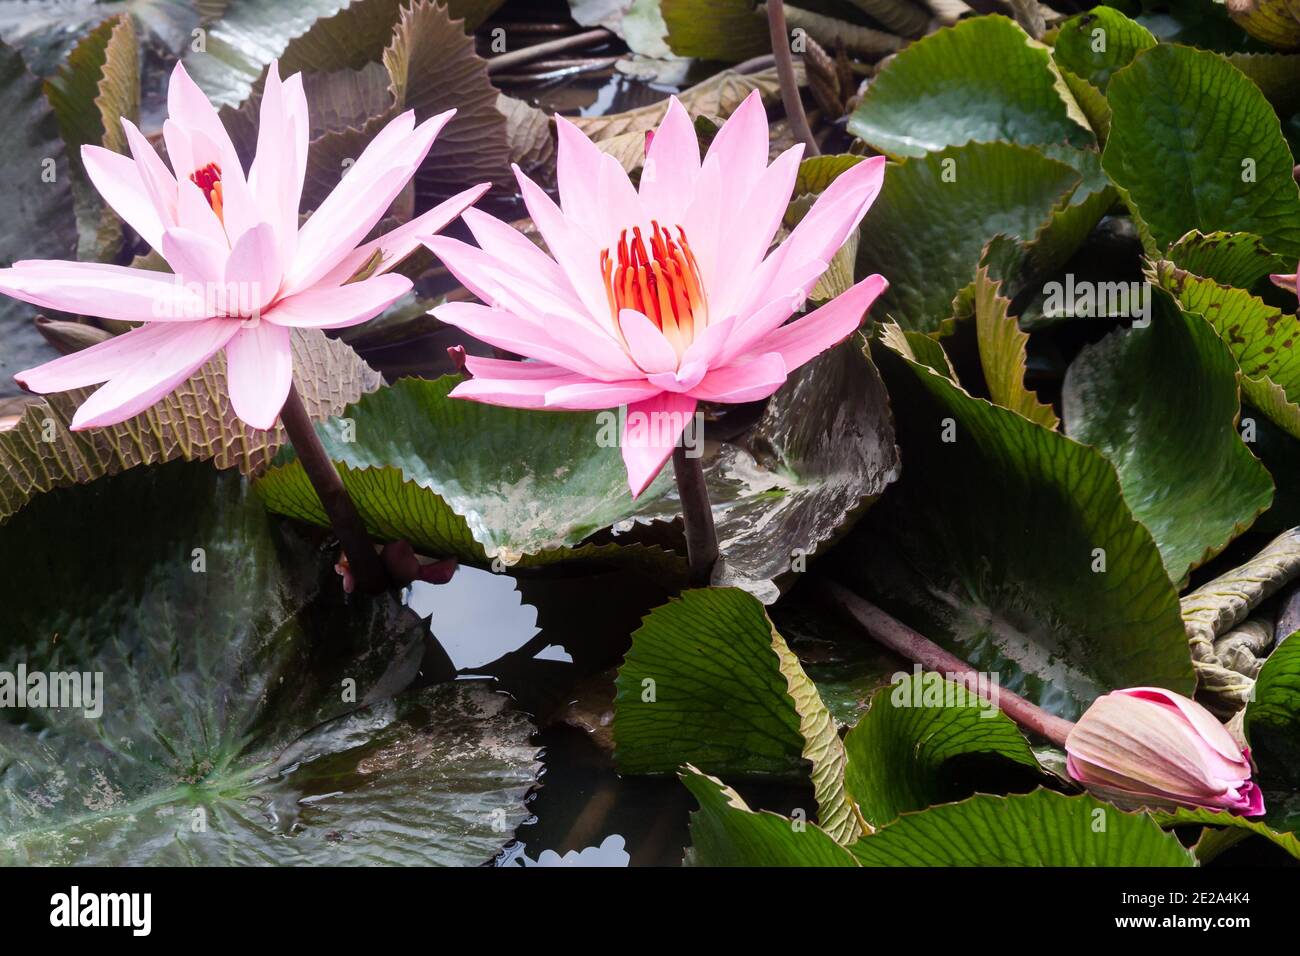 Große wilde rosa Seerose oder Lotusblume, Nelumbo nucifera im Wasser. Indonesien. Stockfoto